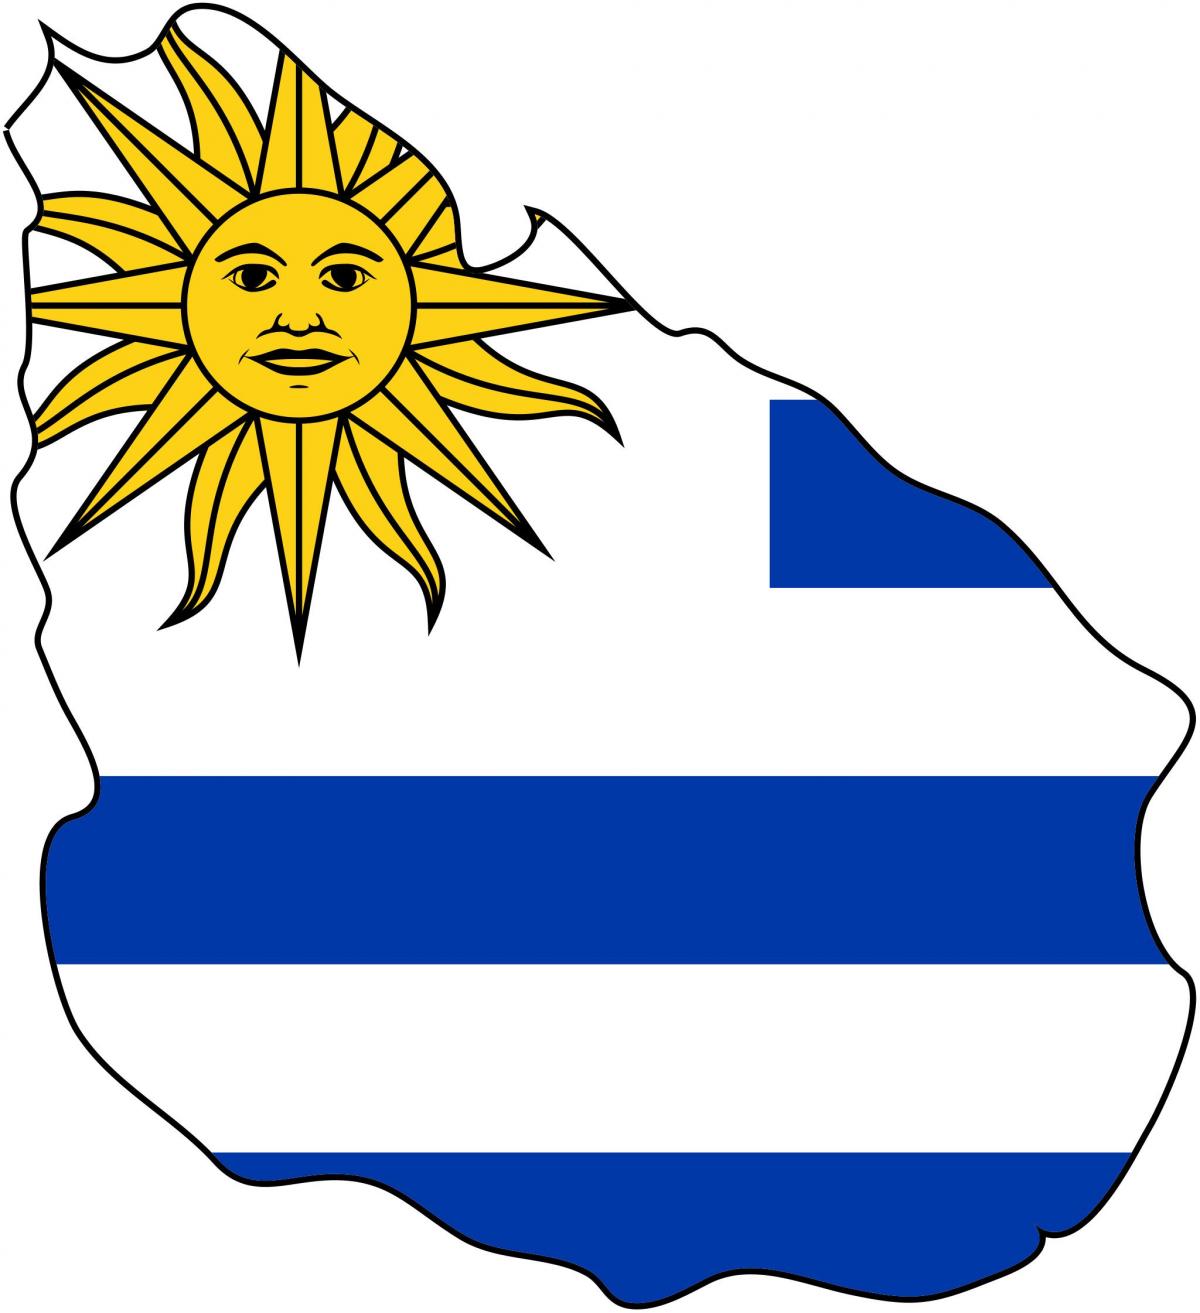 Mapa flaga Urugwaju